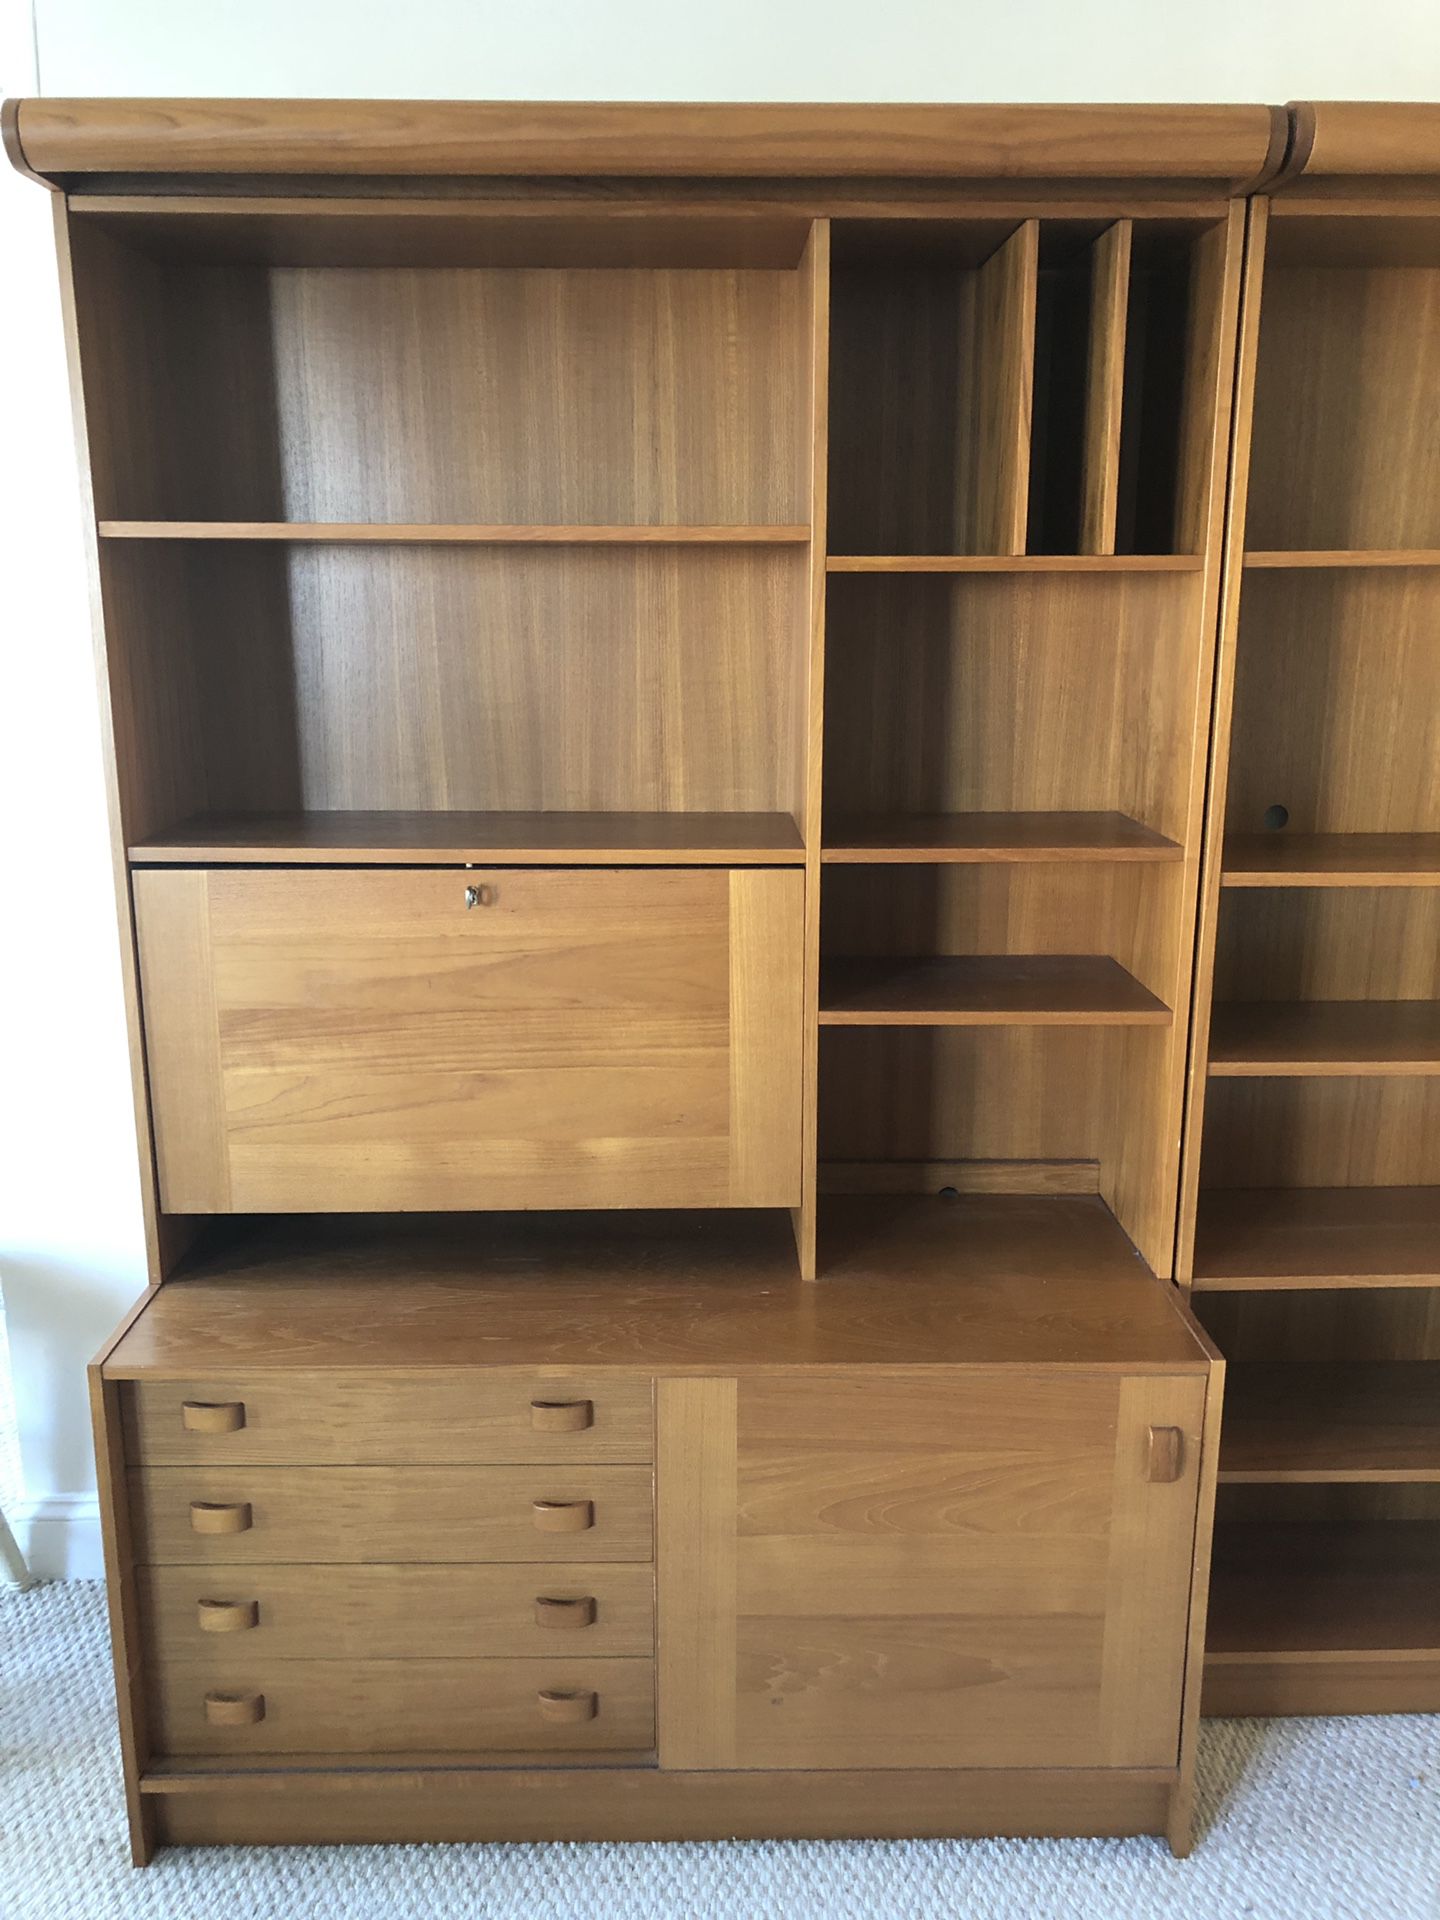 Wood furniture- Bookcase - Media Storage